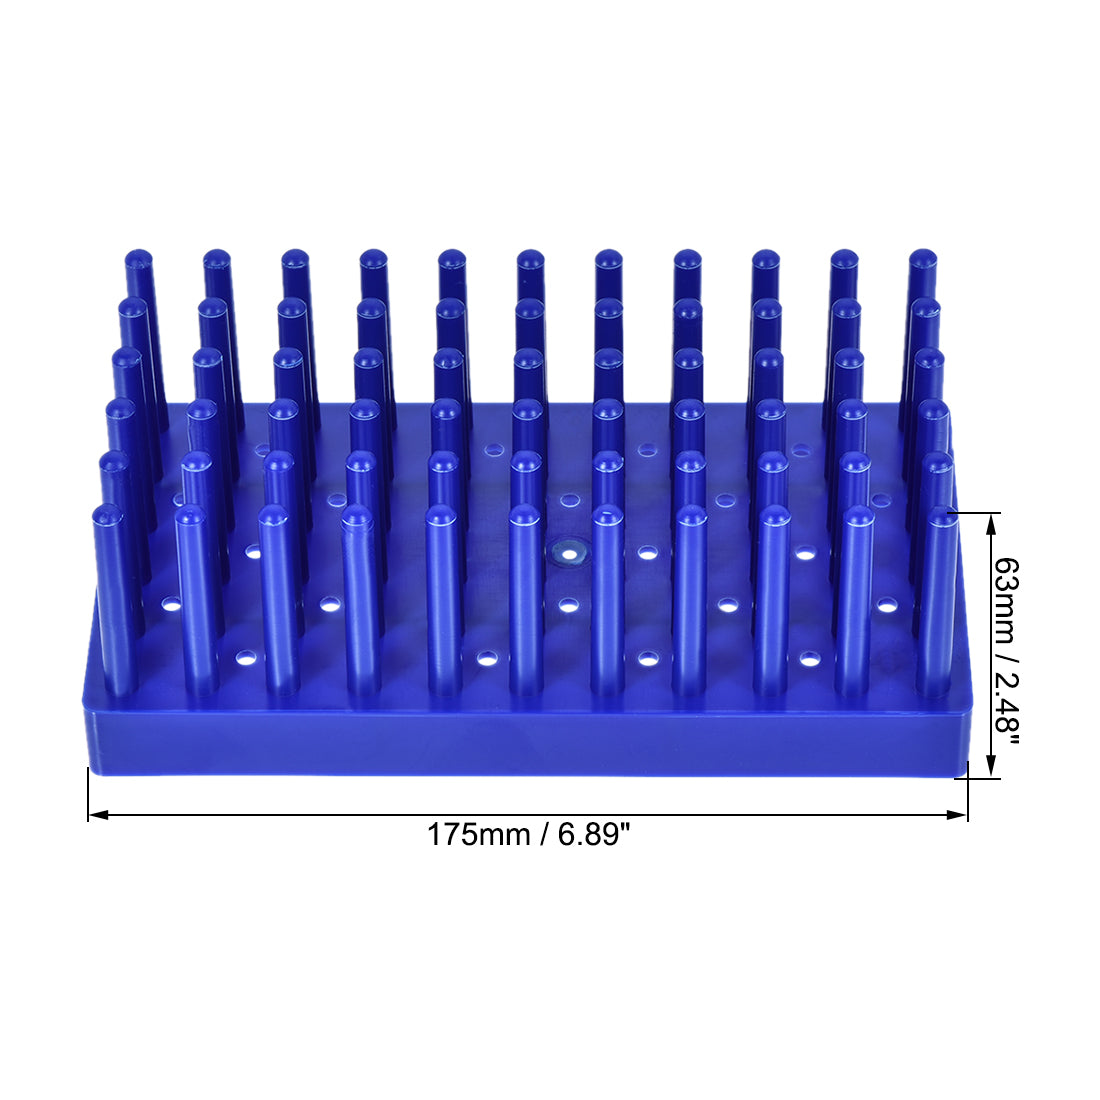 Uxcell Uxcell Polypropylene Test Tube Stand Holder Rack 66 Wells for 10-15mm Tubes Blue 3Pcs